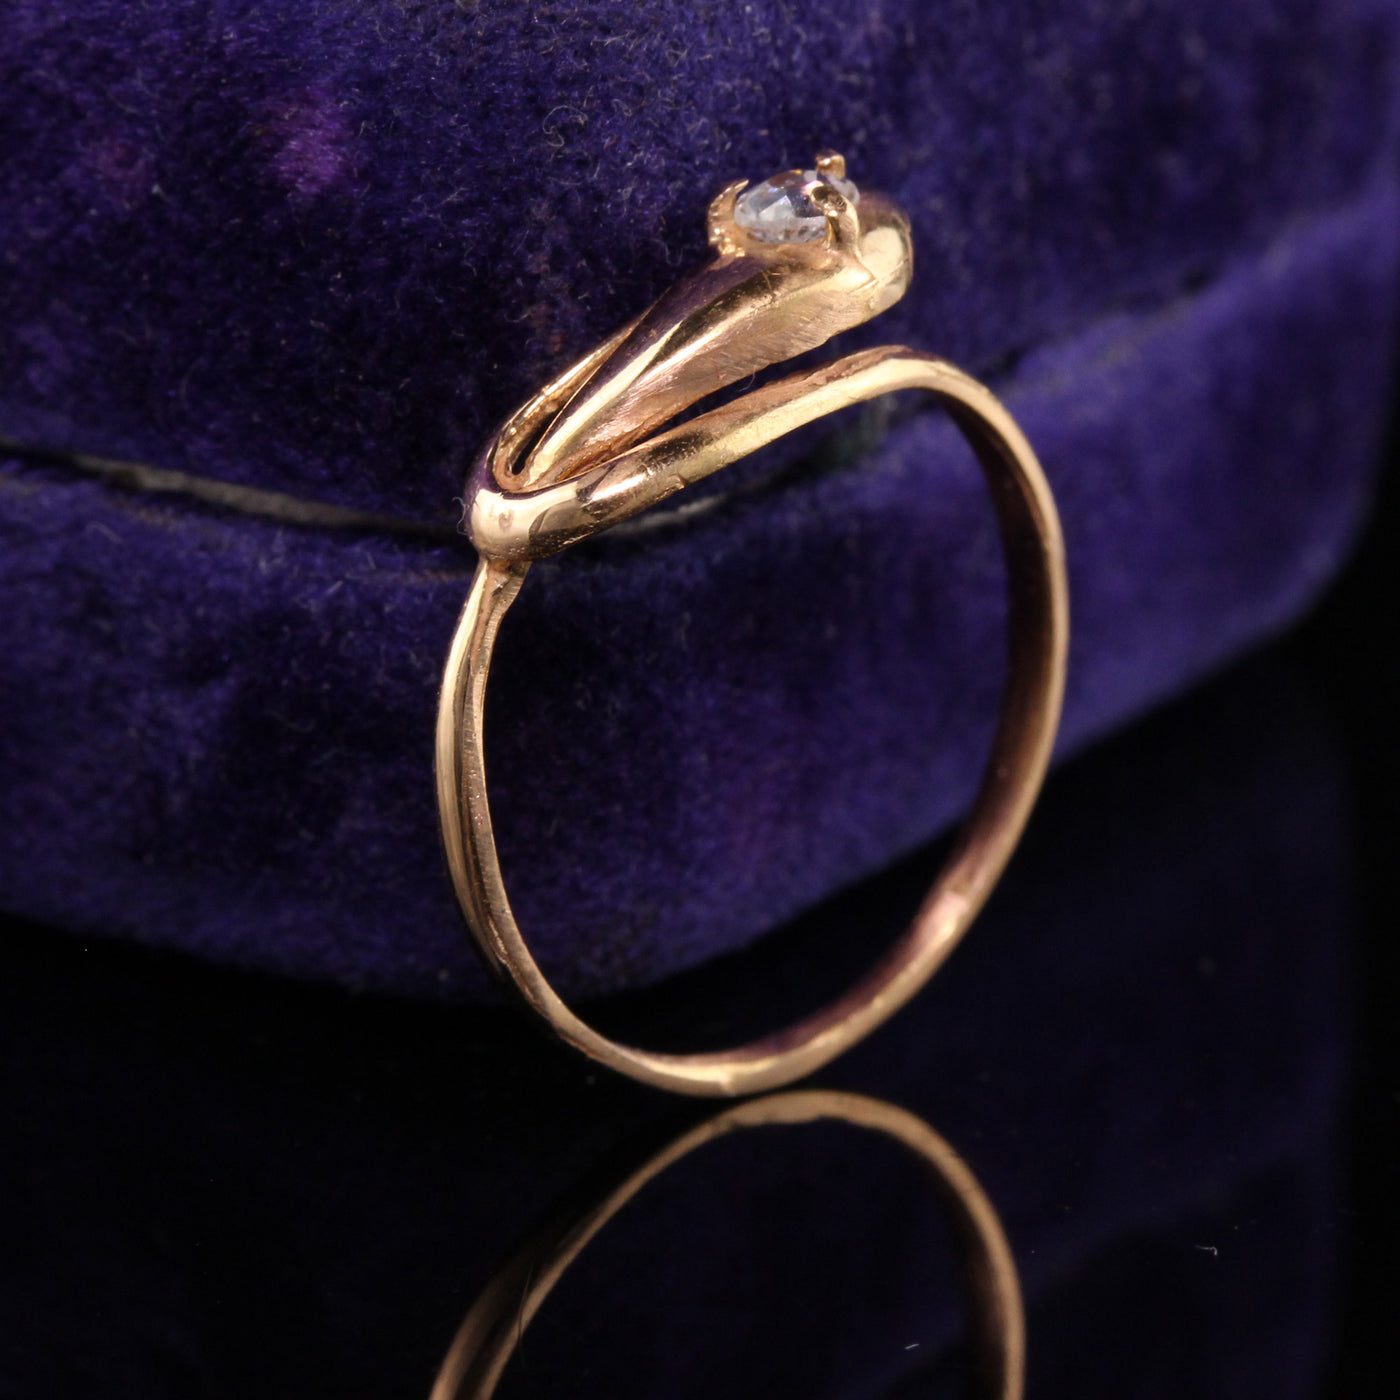 Antique Victorian 18K Rose Gold Old Mine Cut Diamond Snake Ring